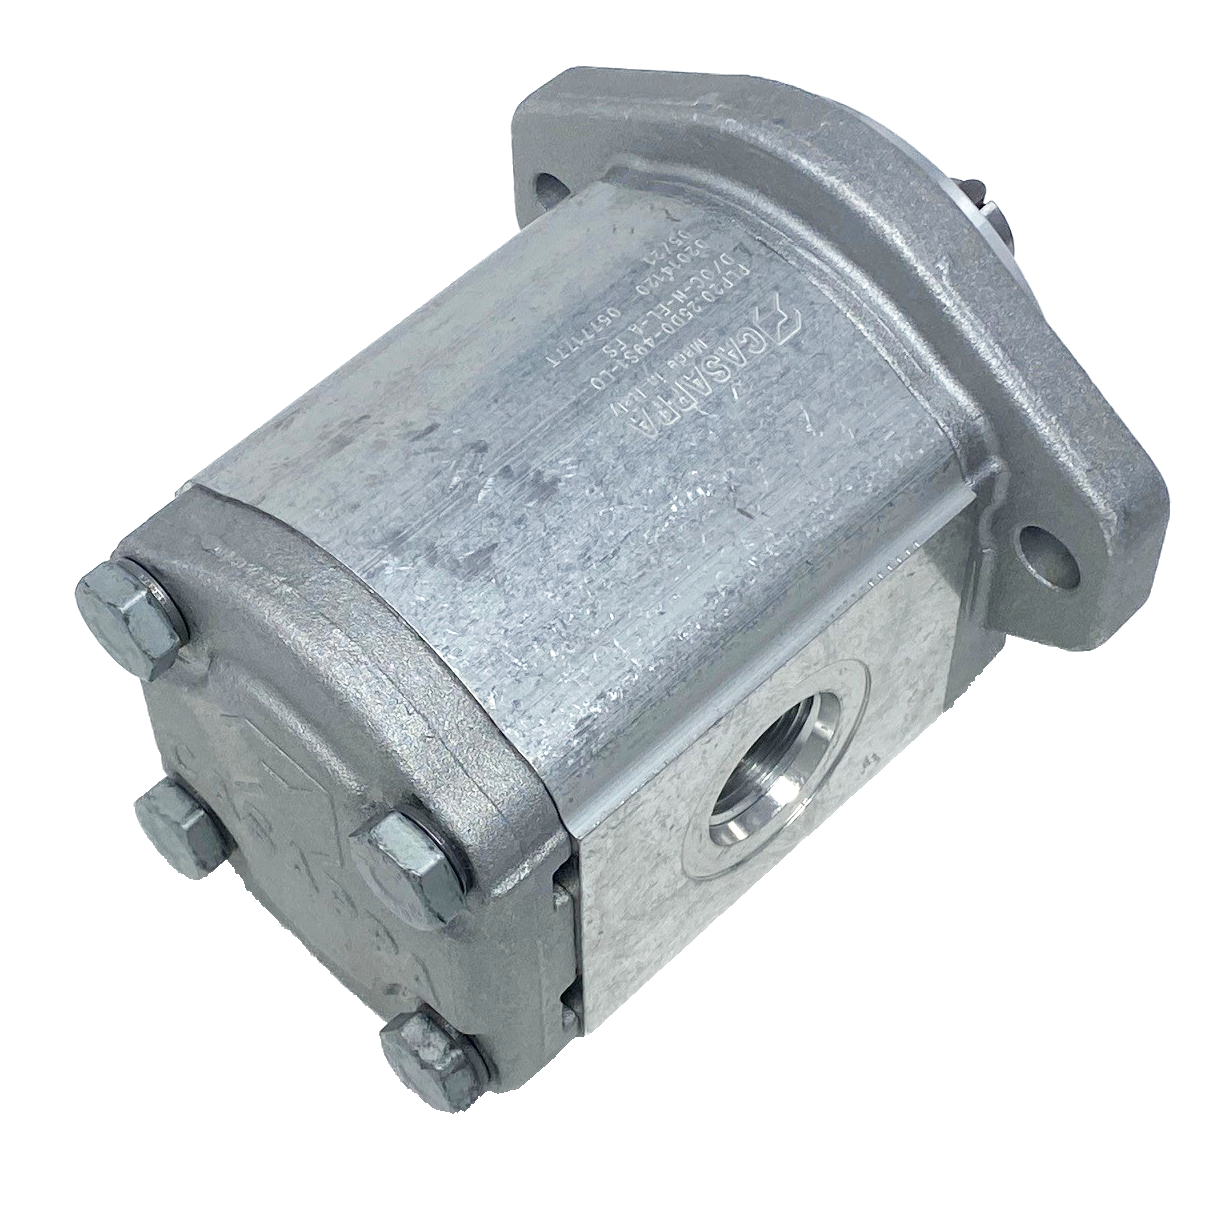 PLM20.31,5B0-50S1-LOC/OD-N-EL : Casappa Polaris Gear Motor, 33.03cc, 1885psi Rated, 2465RPM, Reversible Interior Drain, 3/4" Bore x 3/16" Key Shaft, SAE A 2-Bolt Flange, 0.625 (5/8") #10 SAE Inlet, 0.75 (3/4") #12 SAE Outlet, Aluminum Body & Flange